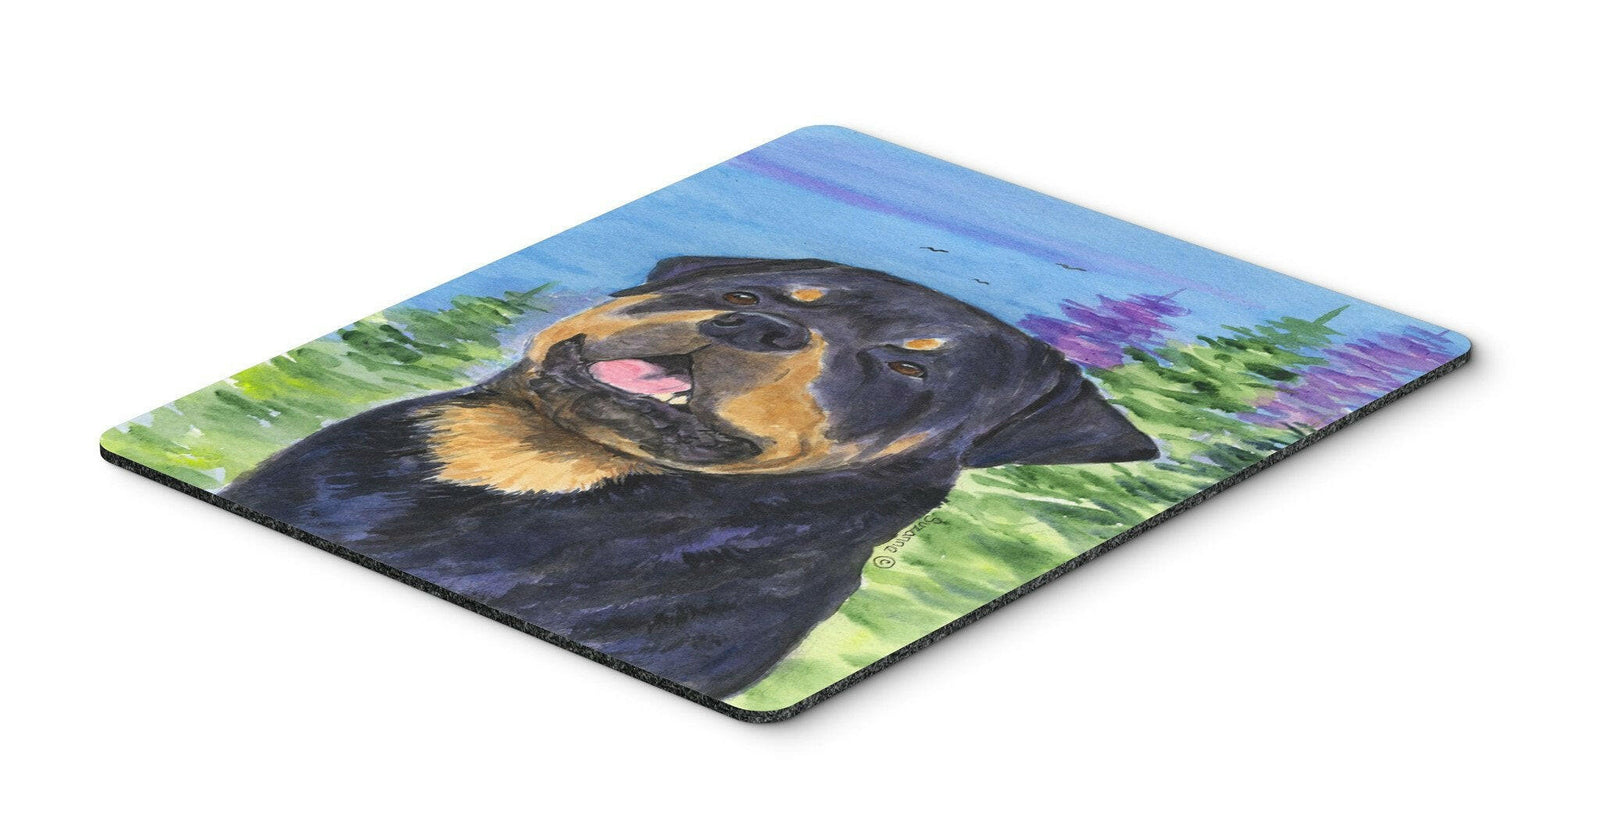 Rottweiler Mouse Pad / Hot Pad / Trivet by Caroline's Treasures